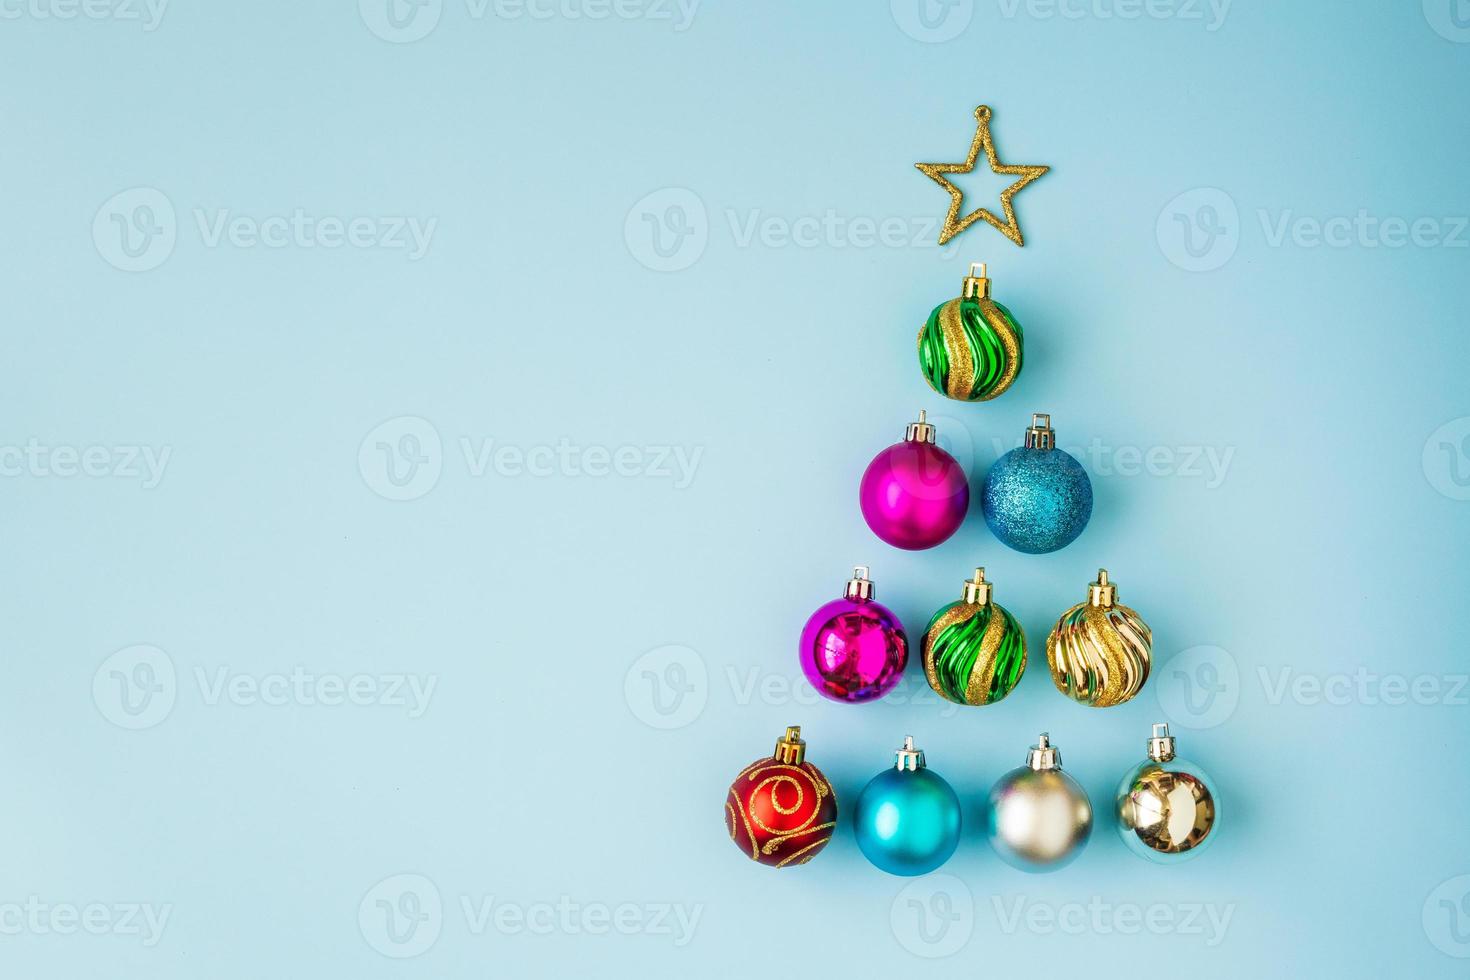 árvore de natal de enfeites e estrela dourada sobre fundo azul pastel foto